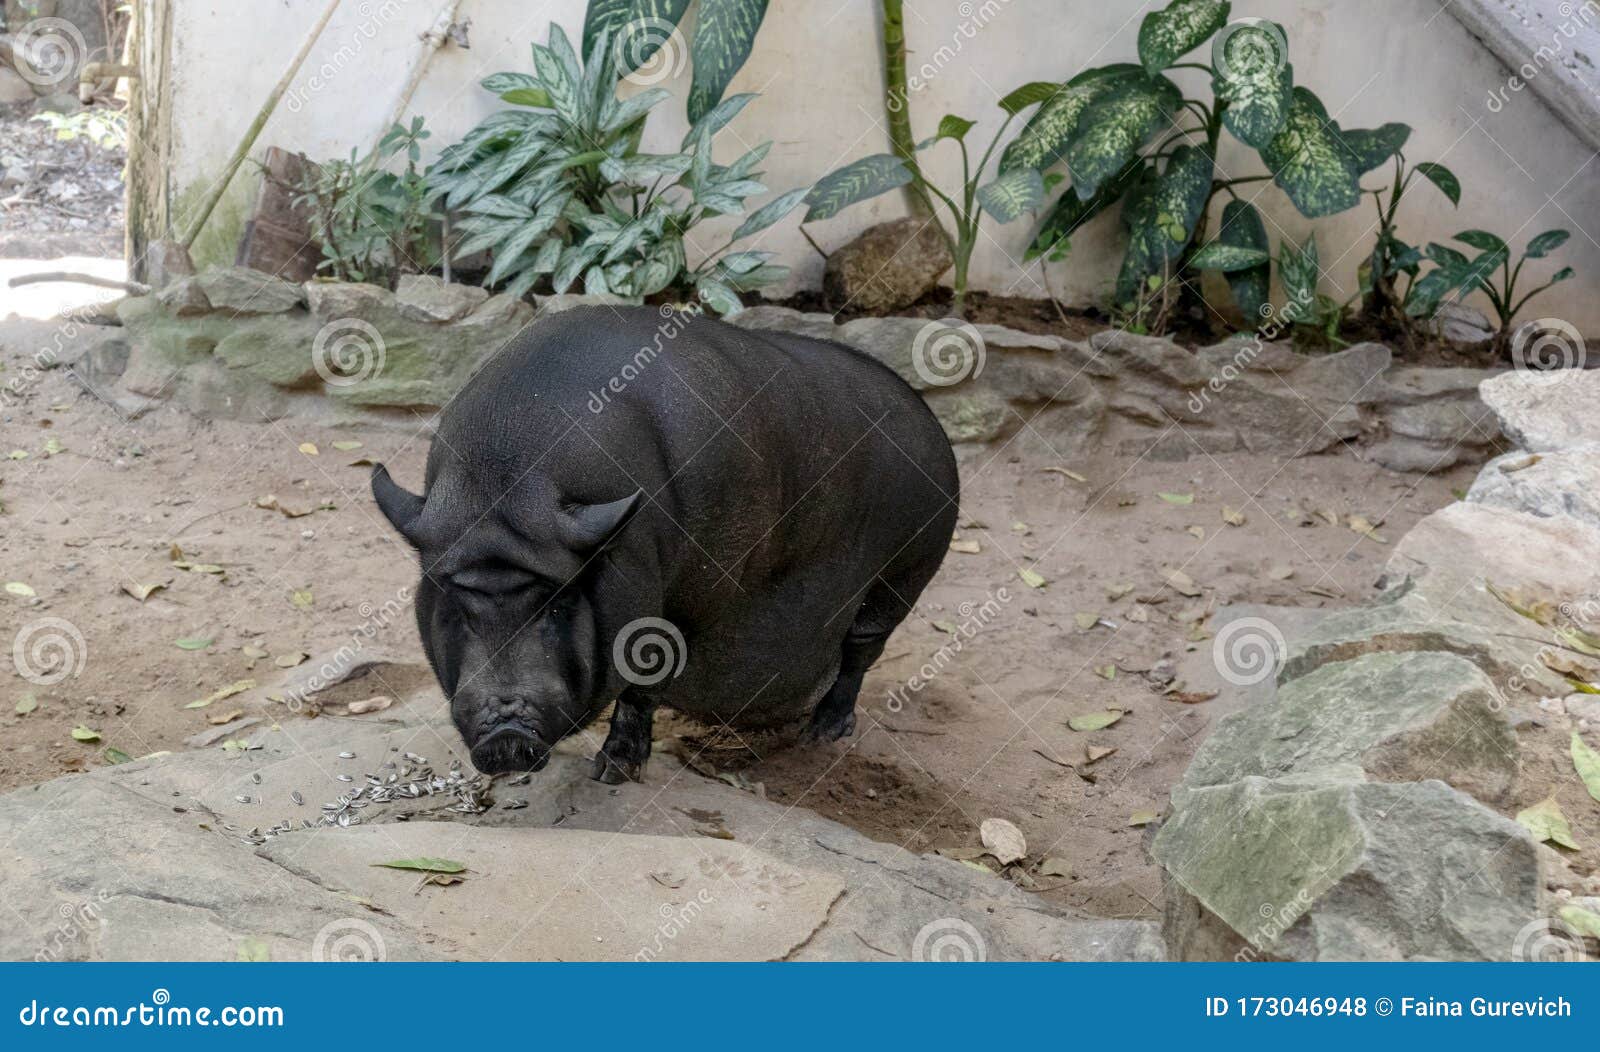 potbellied black pig having a meal